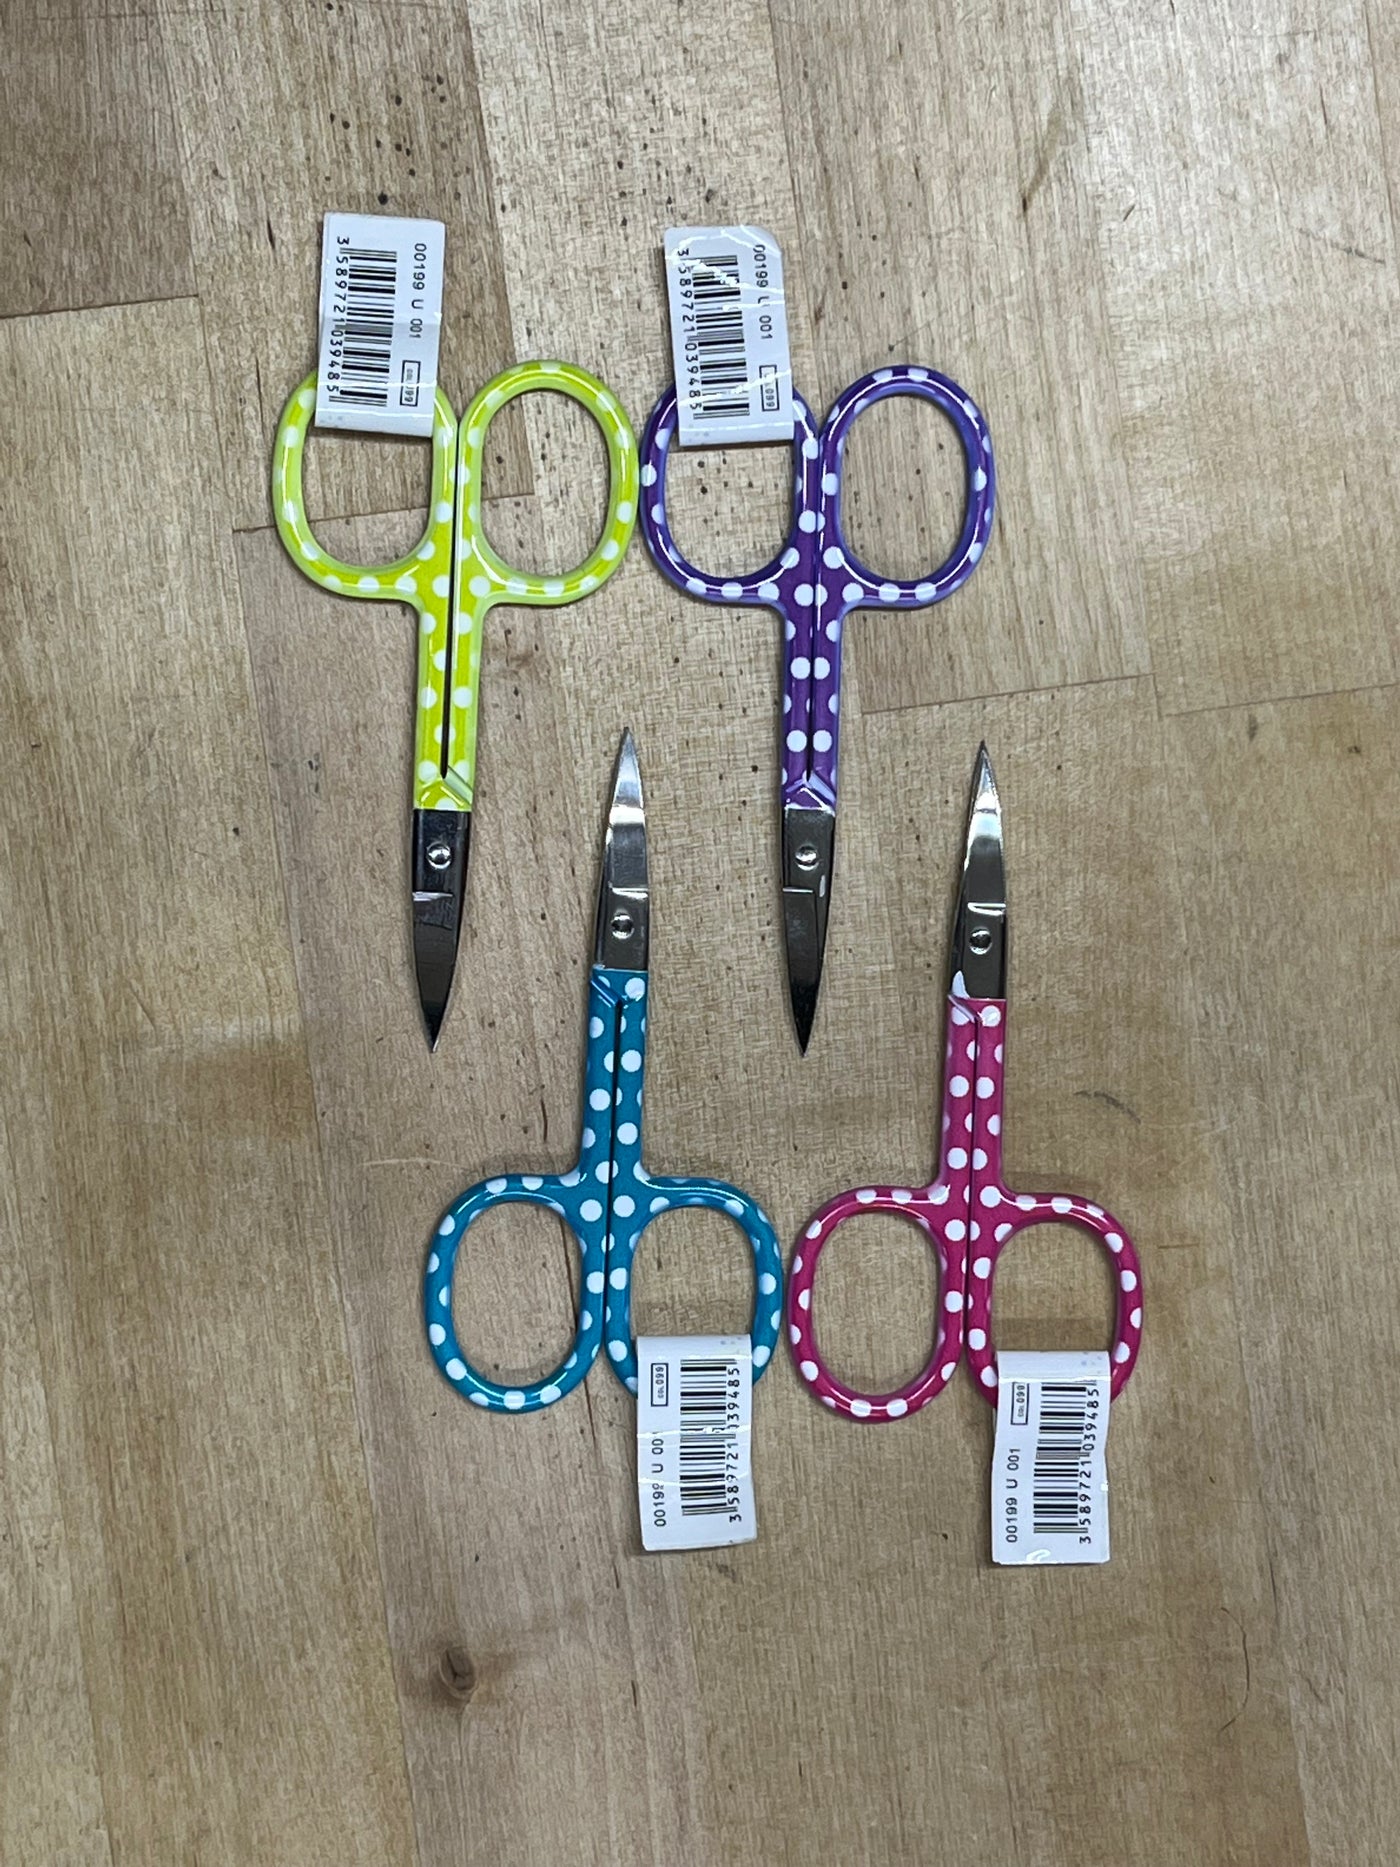 Polka Dot Scissors